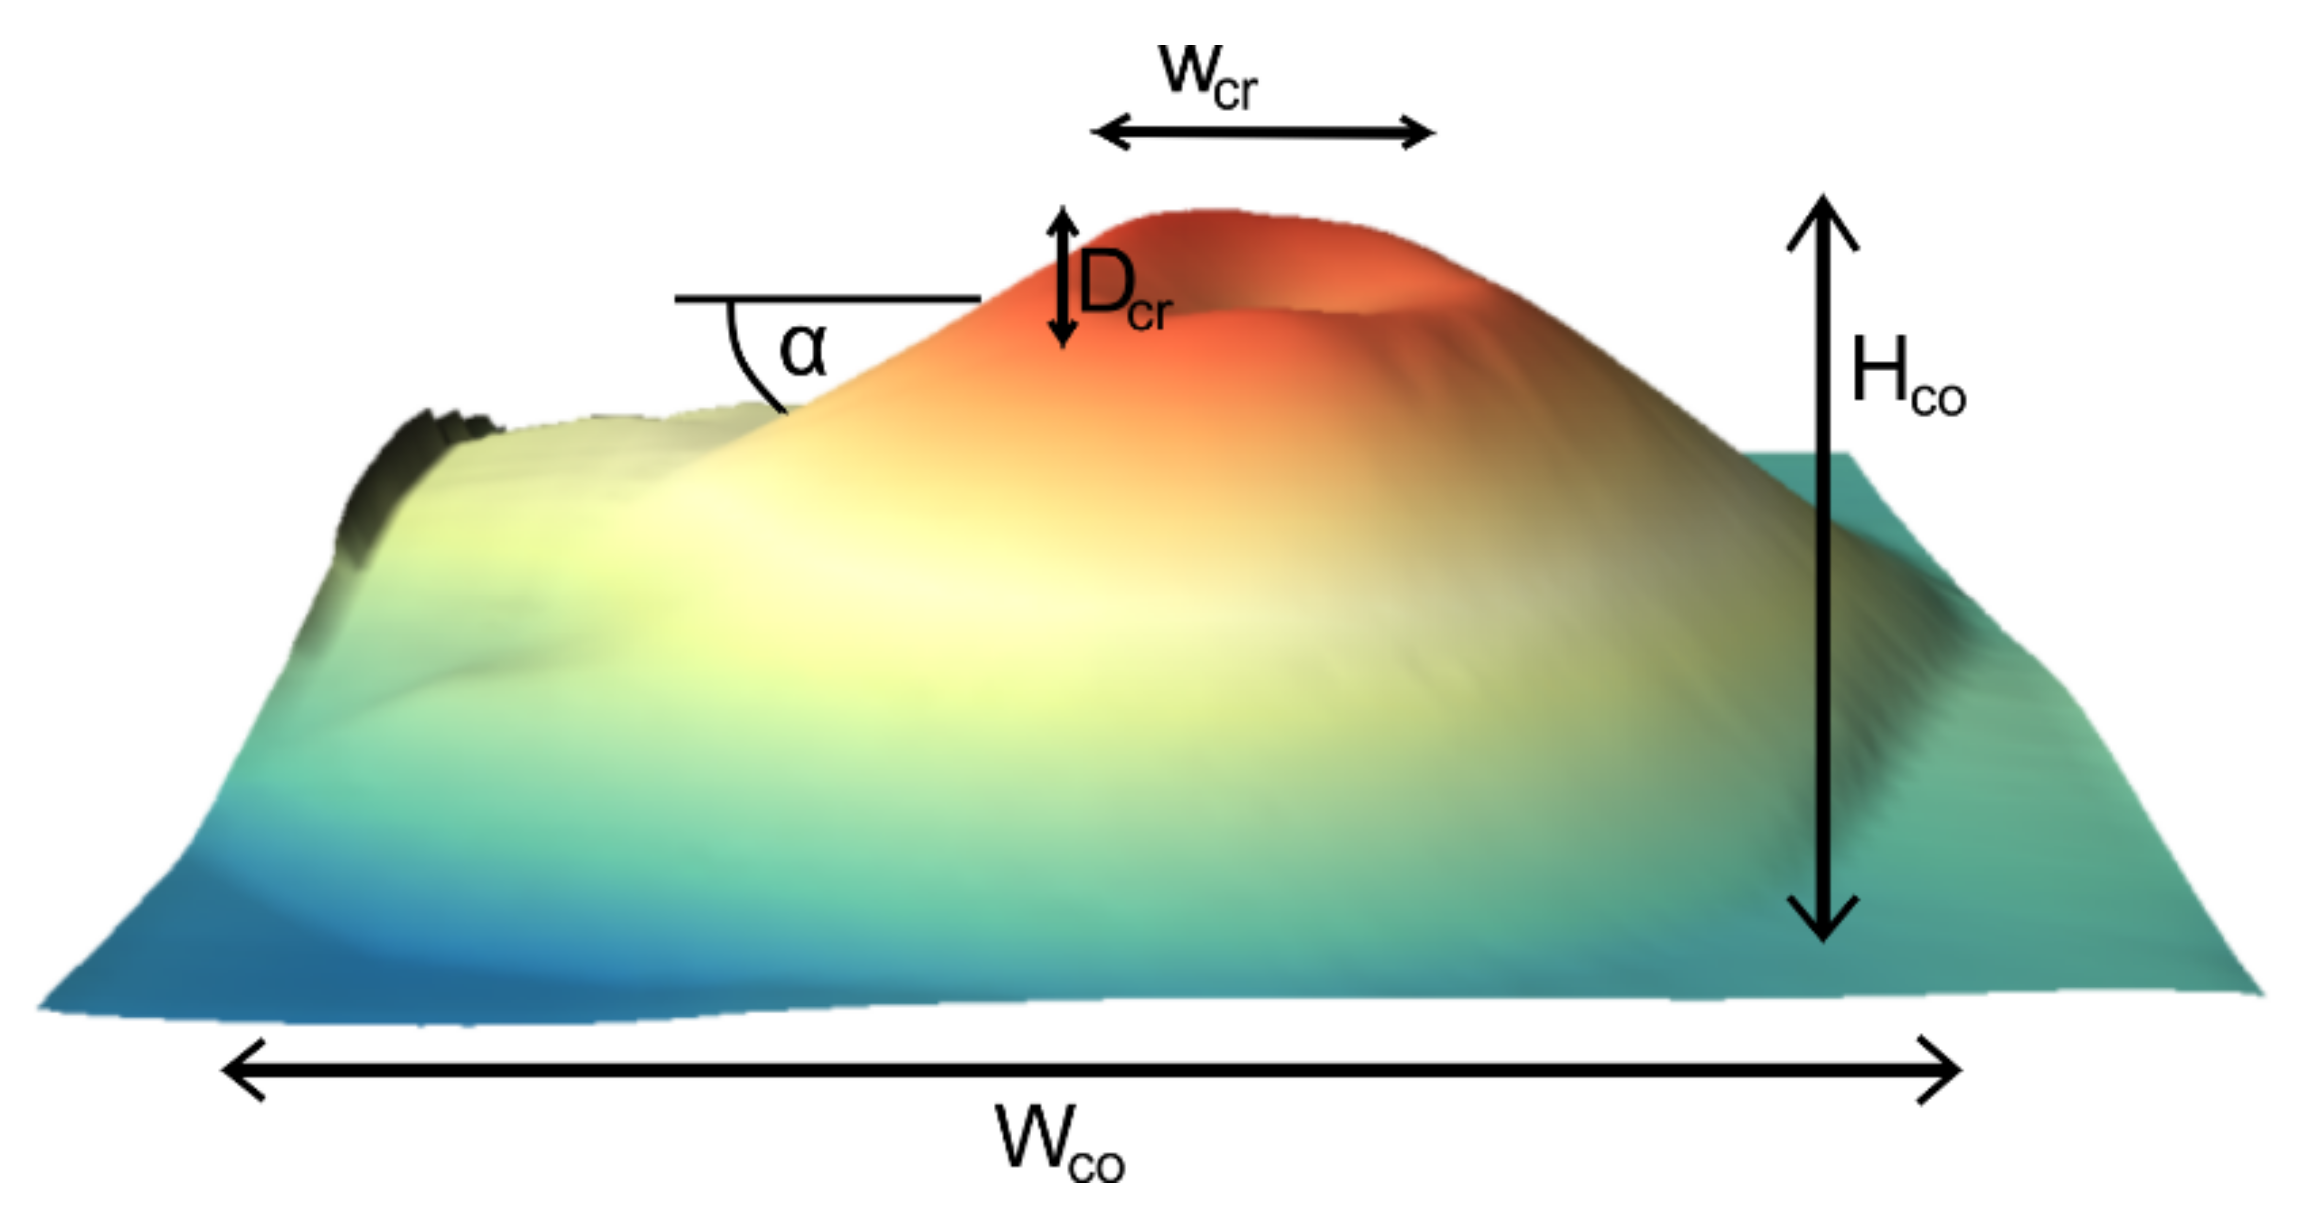 volcano diagram 3d